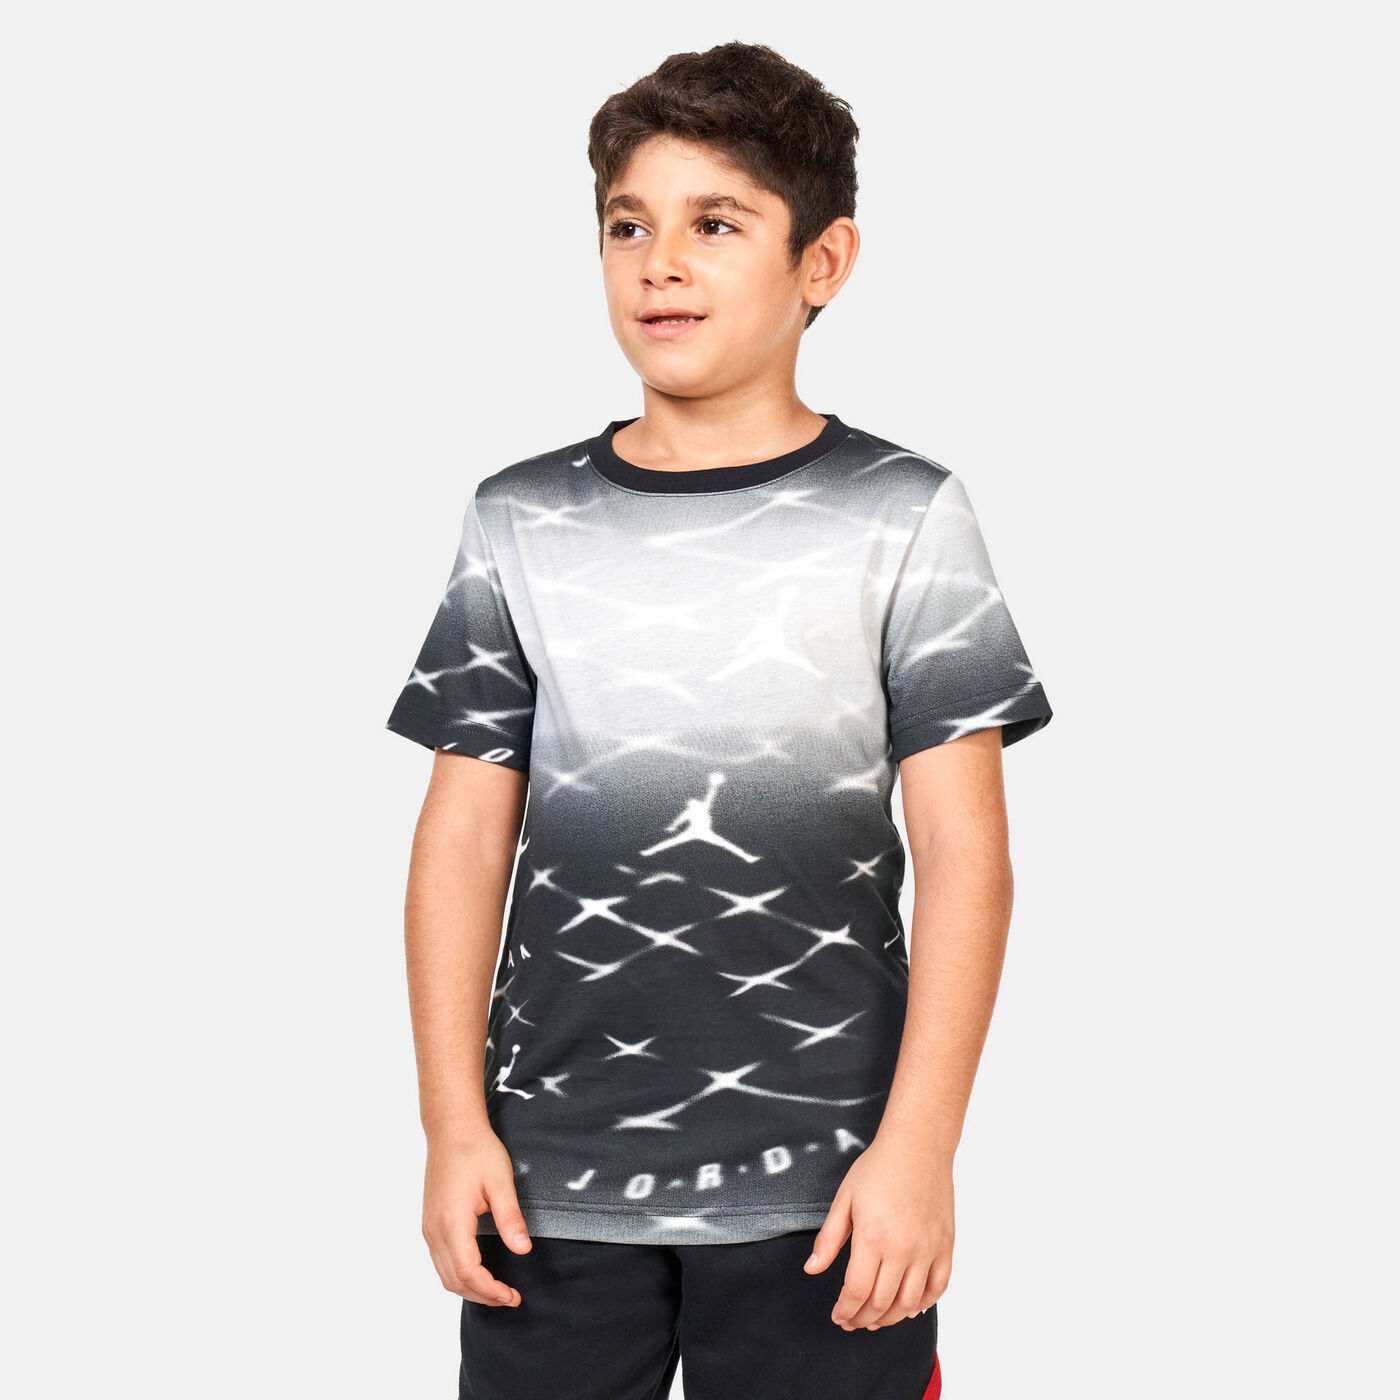 Kids' MJ Essentials Printed Basketball T-Shirt (Older Kids)